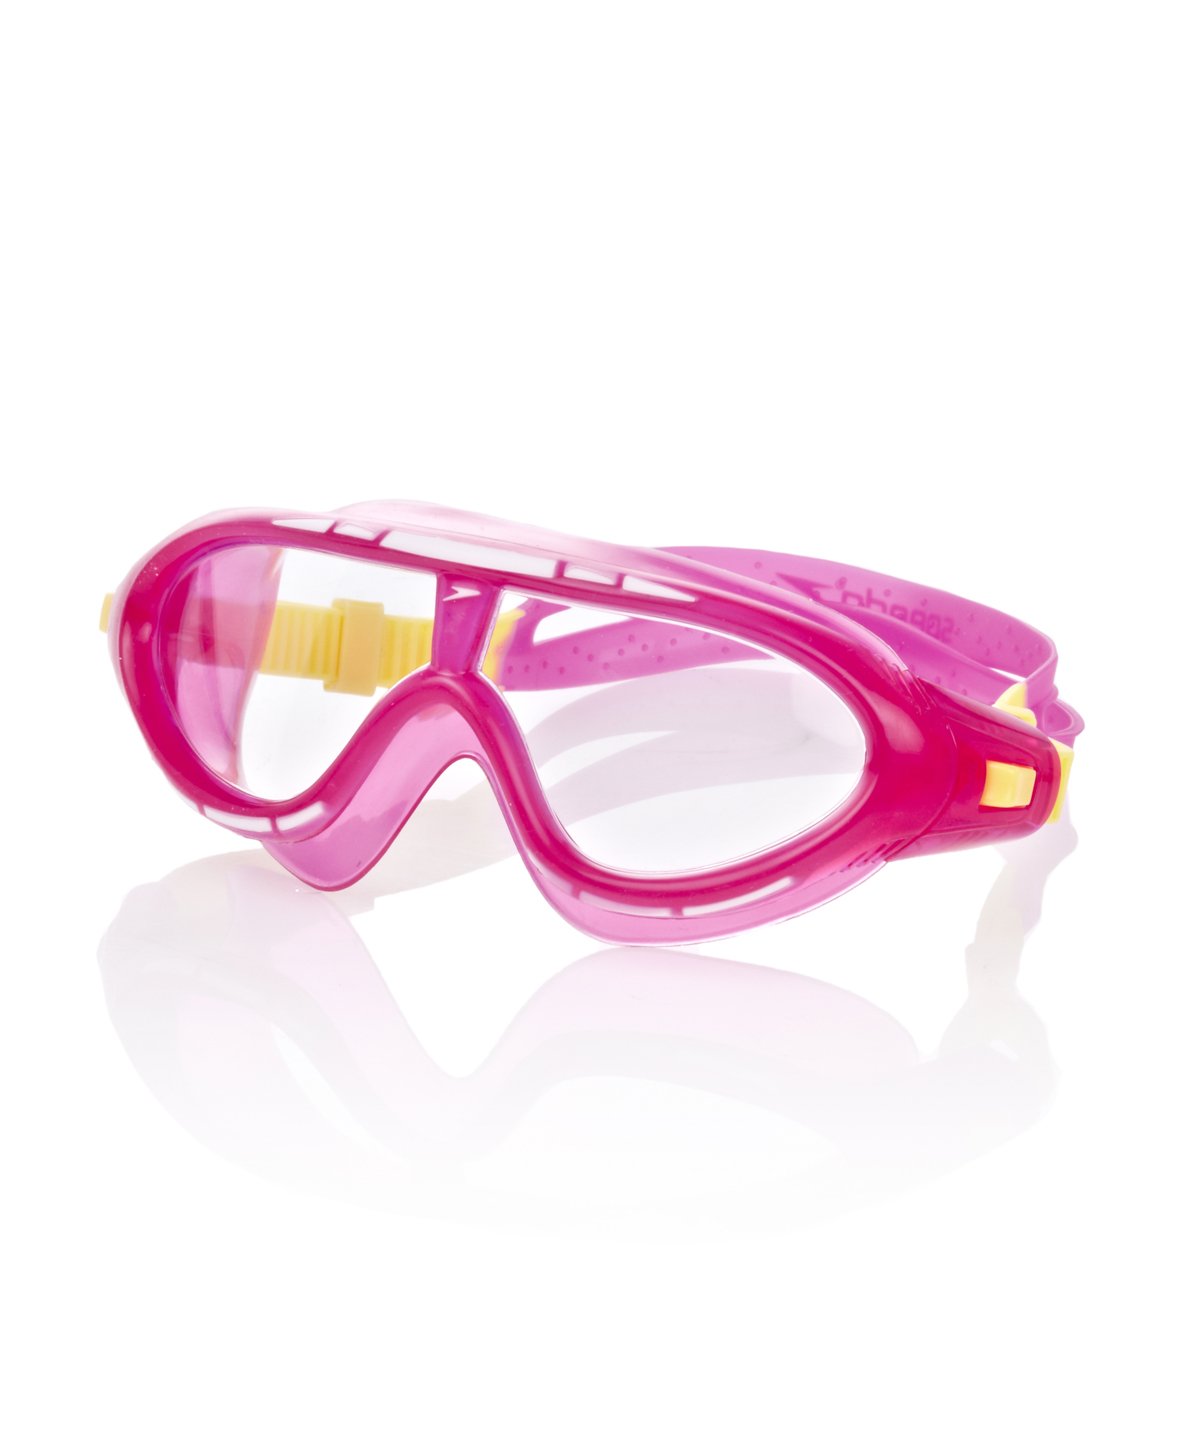 Speedo Unisex - Junior Rift Goggles (Pink/Yellow) - Best Price online Prokicksports.com